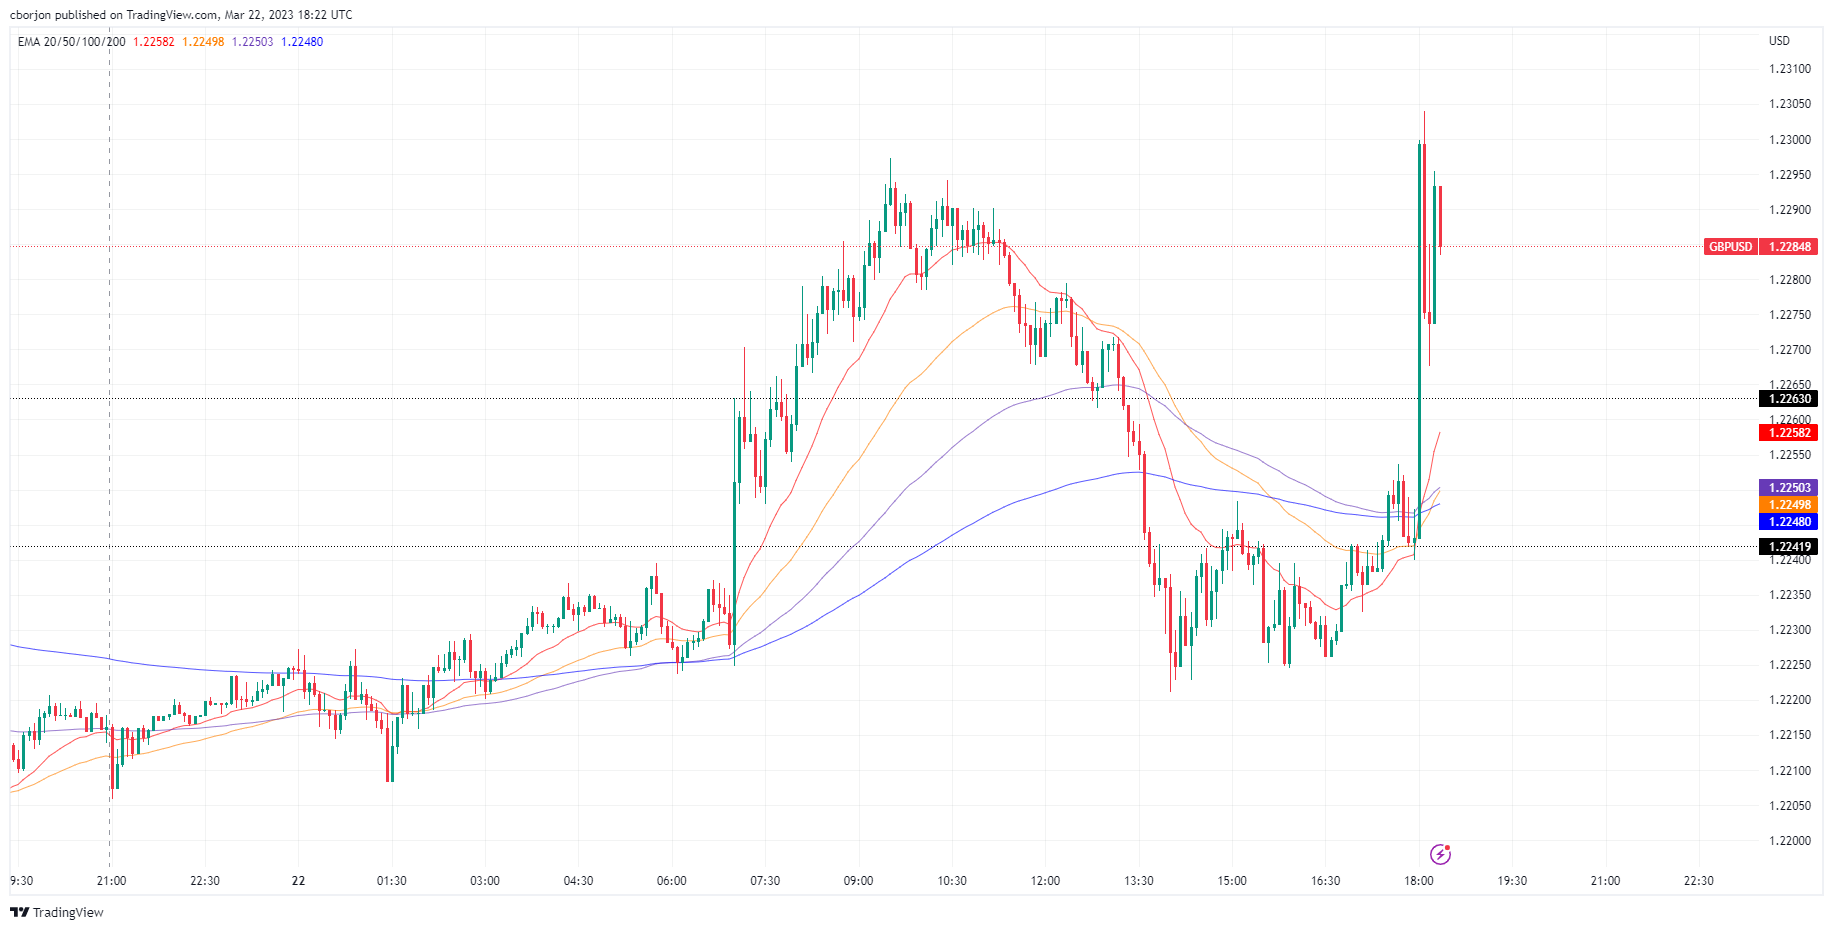 GBP/USD 5 minute chart